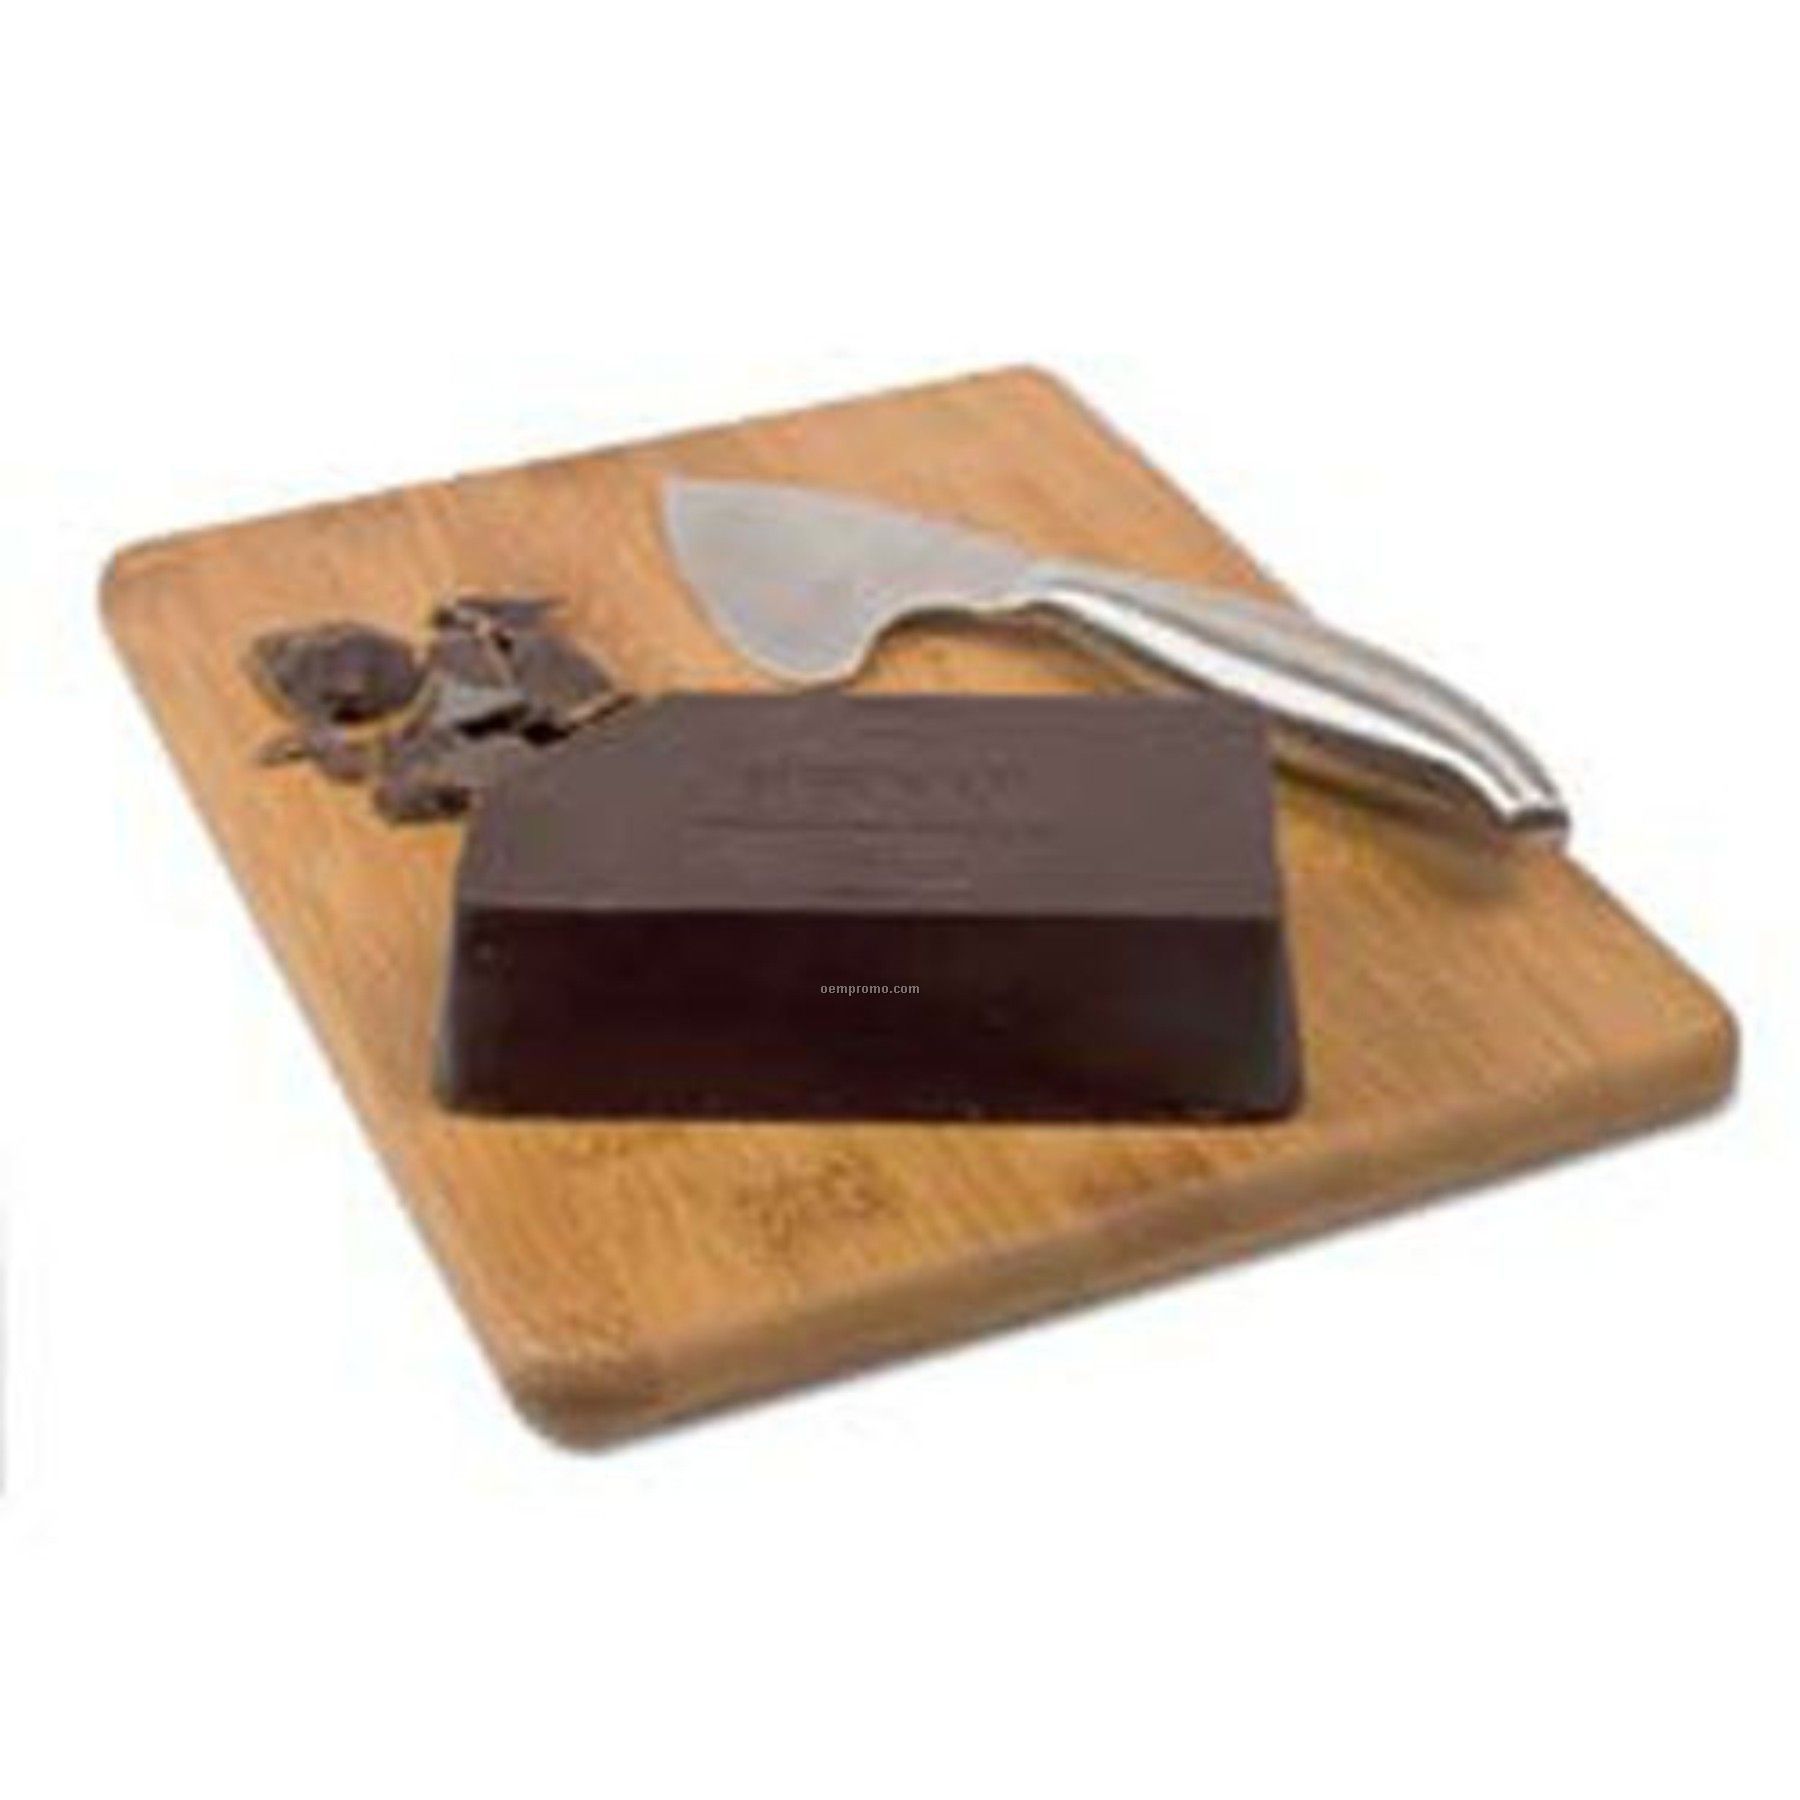 Bamboo Cutting Board For Cheese/ Chocolate